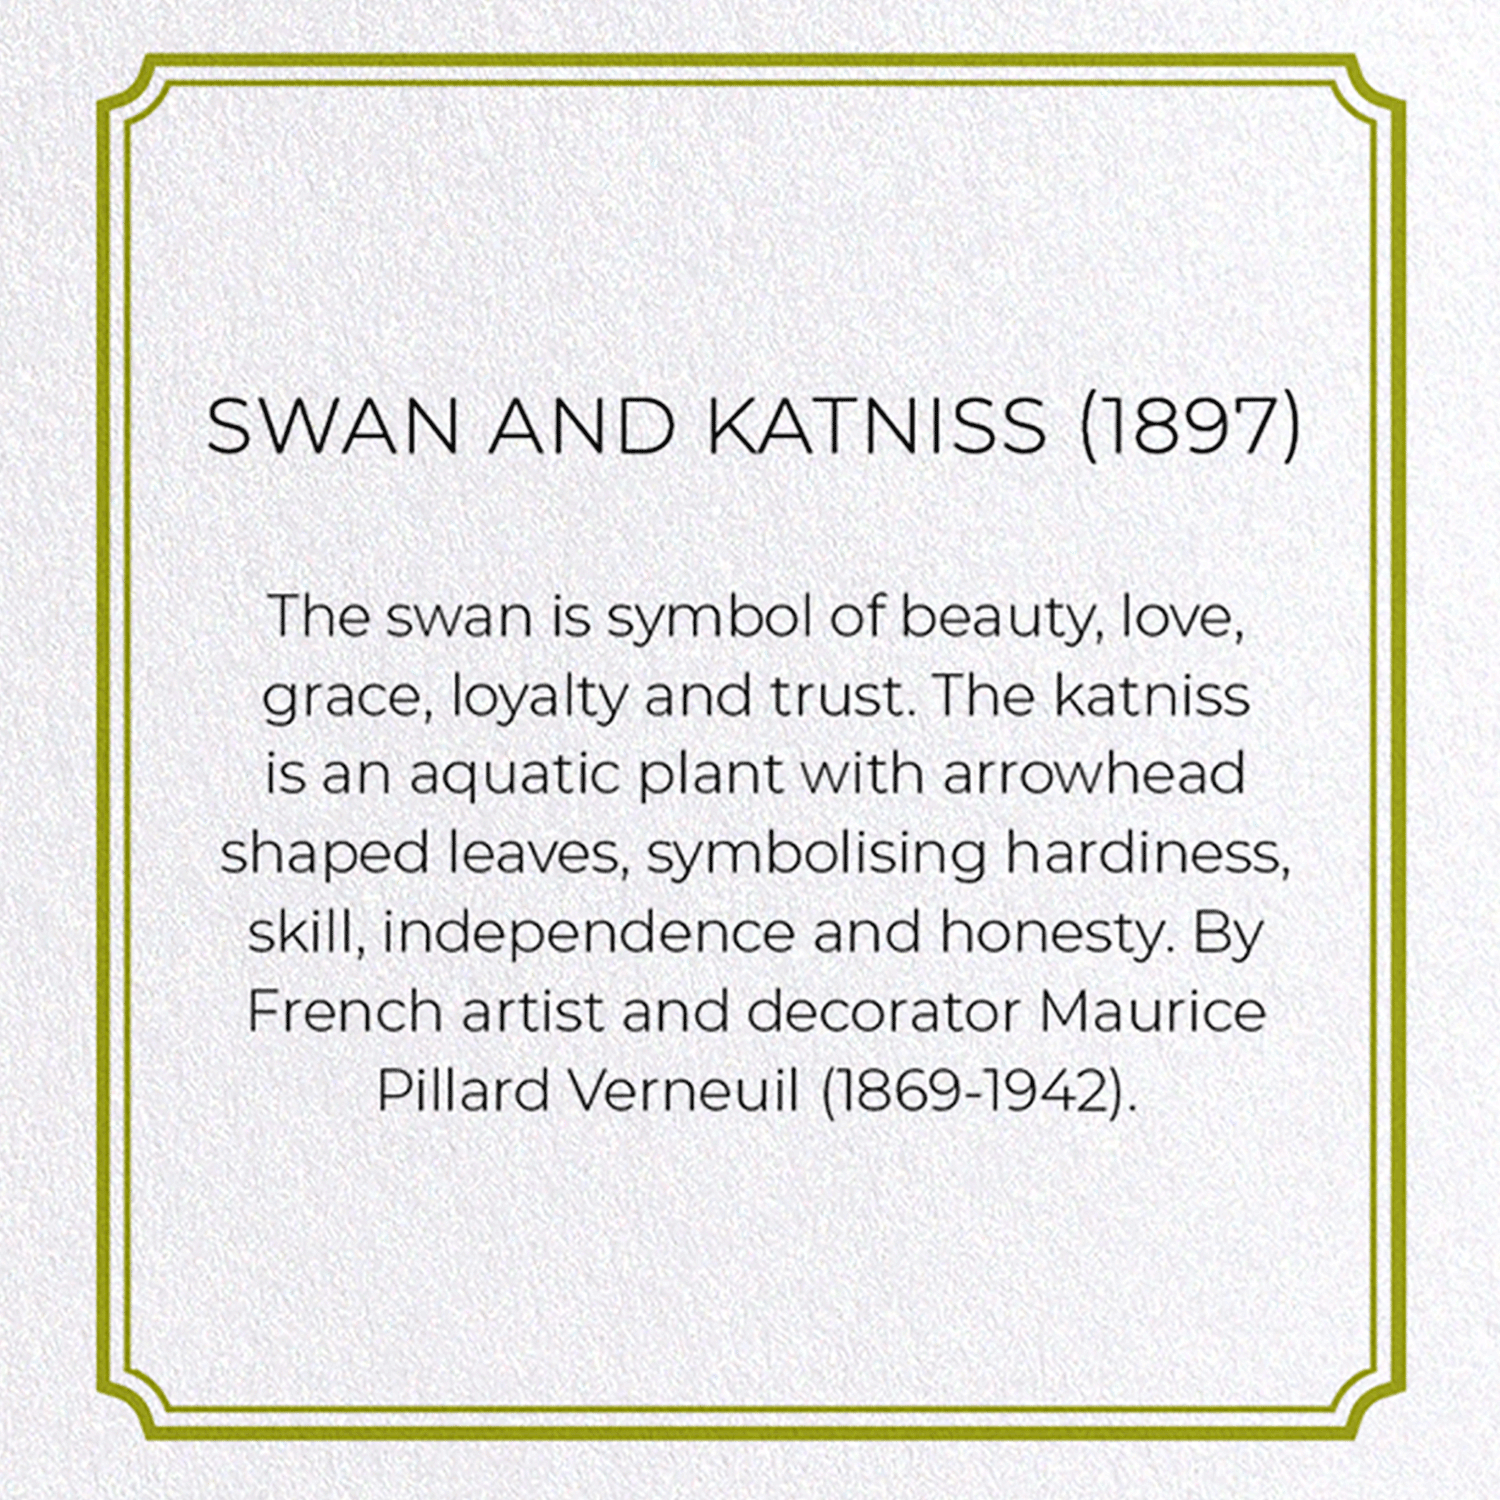 SWAN AND KATNISS (1897)